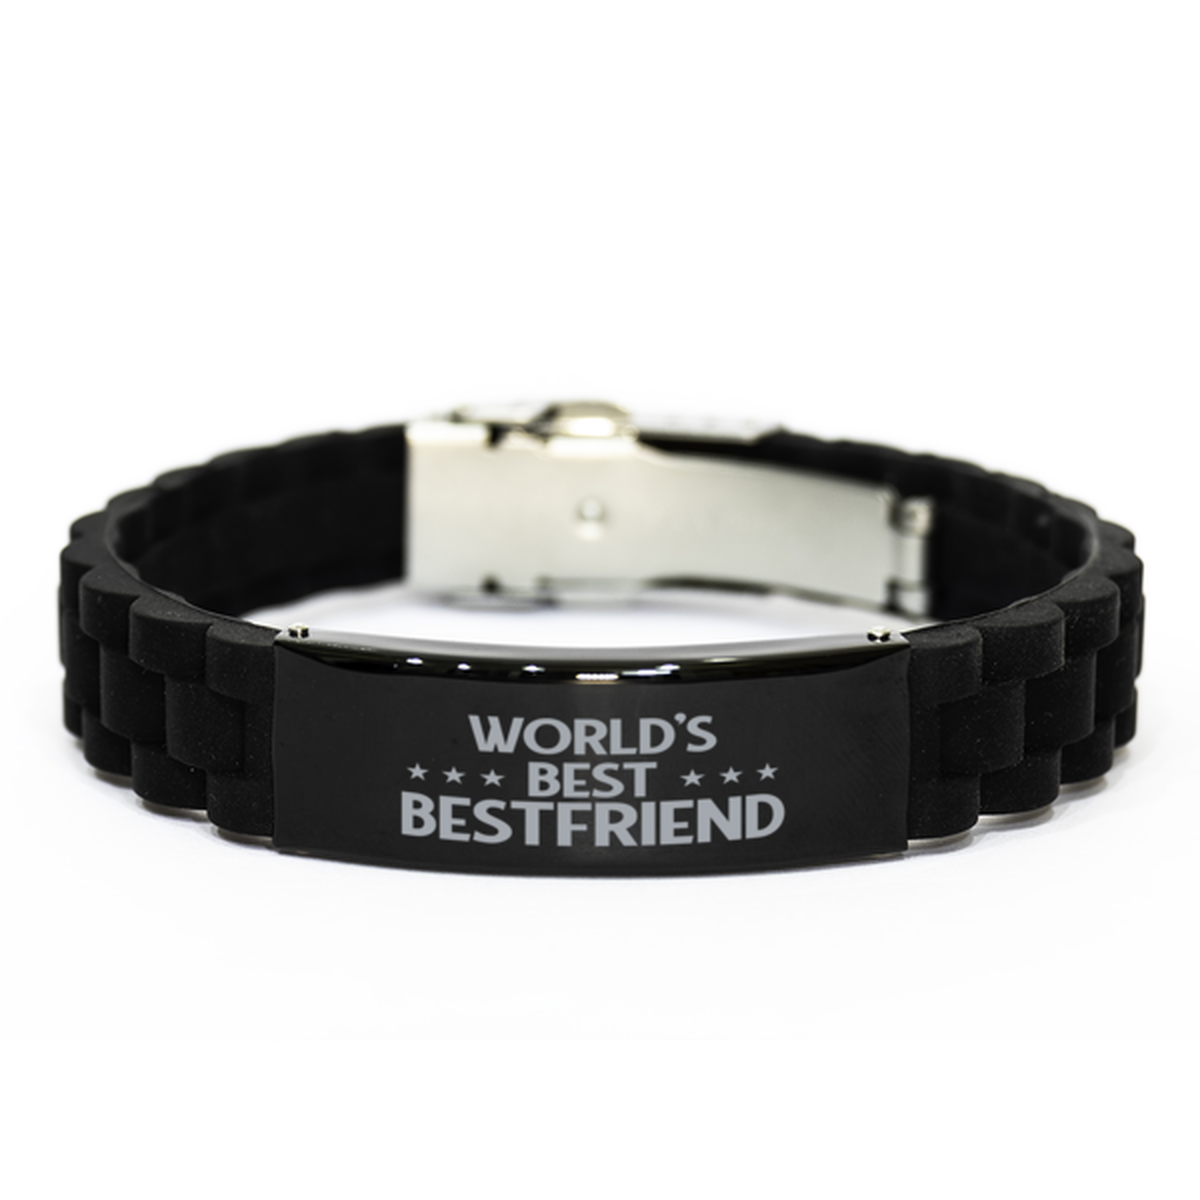 World's Best Bestfriend Gifts, Funny Black Engraved Bracelet For Bestfriend, Family Gifts For Men Women